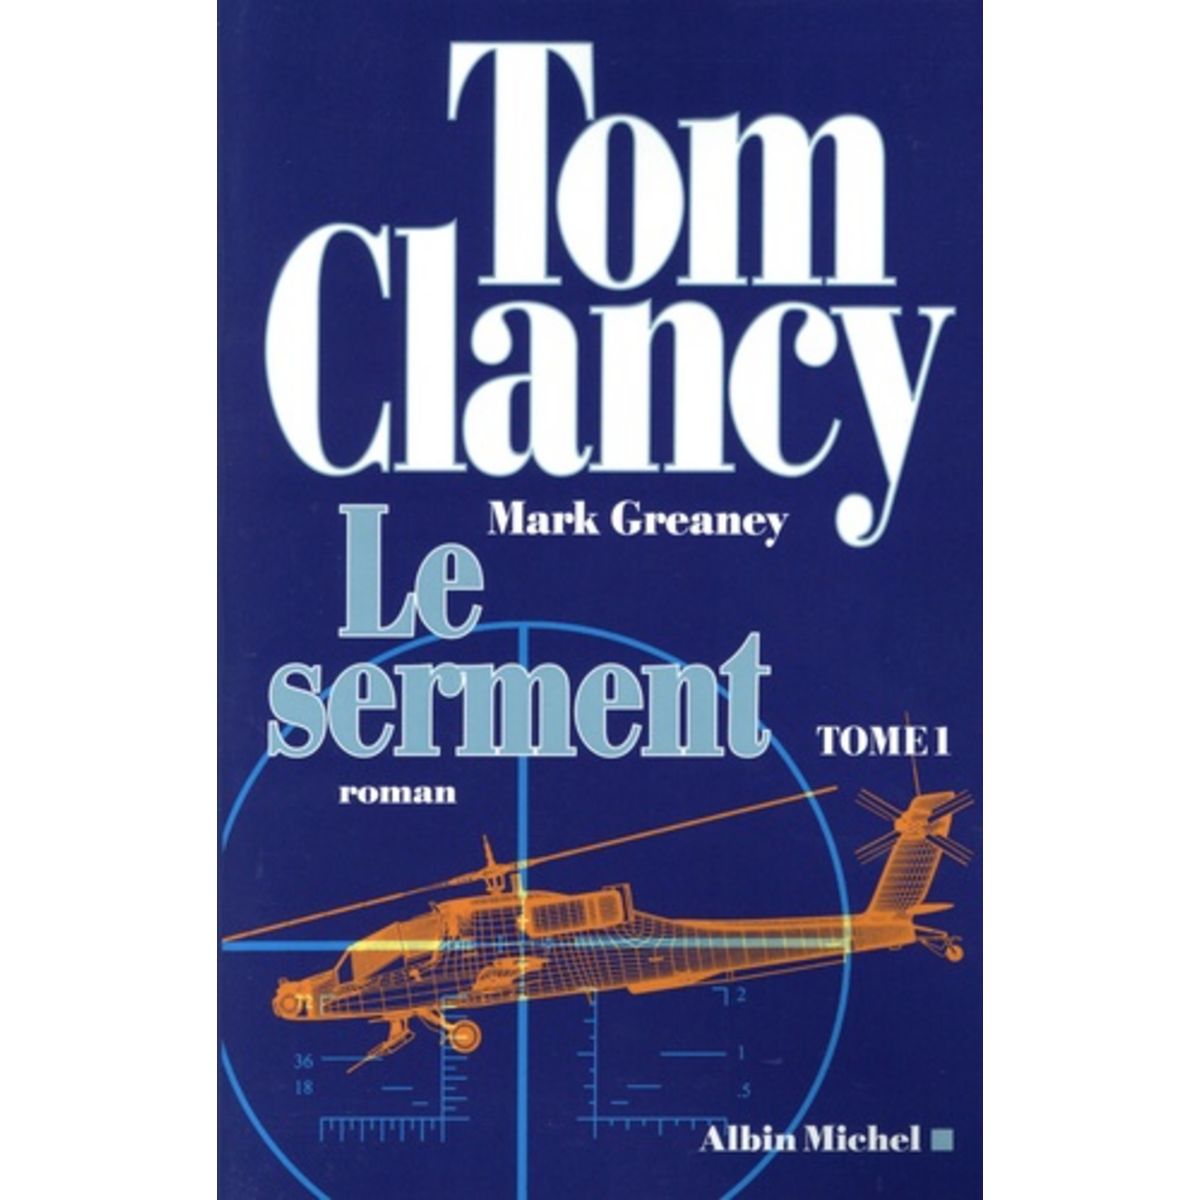  LE SERMENT TOME 1 , Clancy Tom